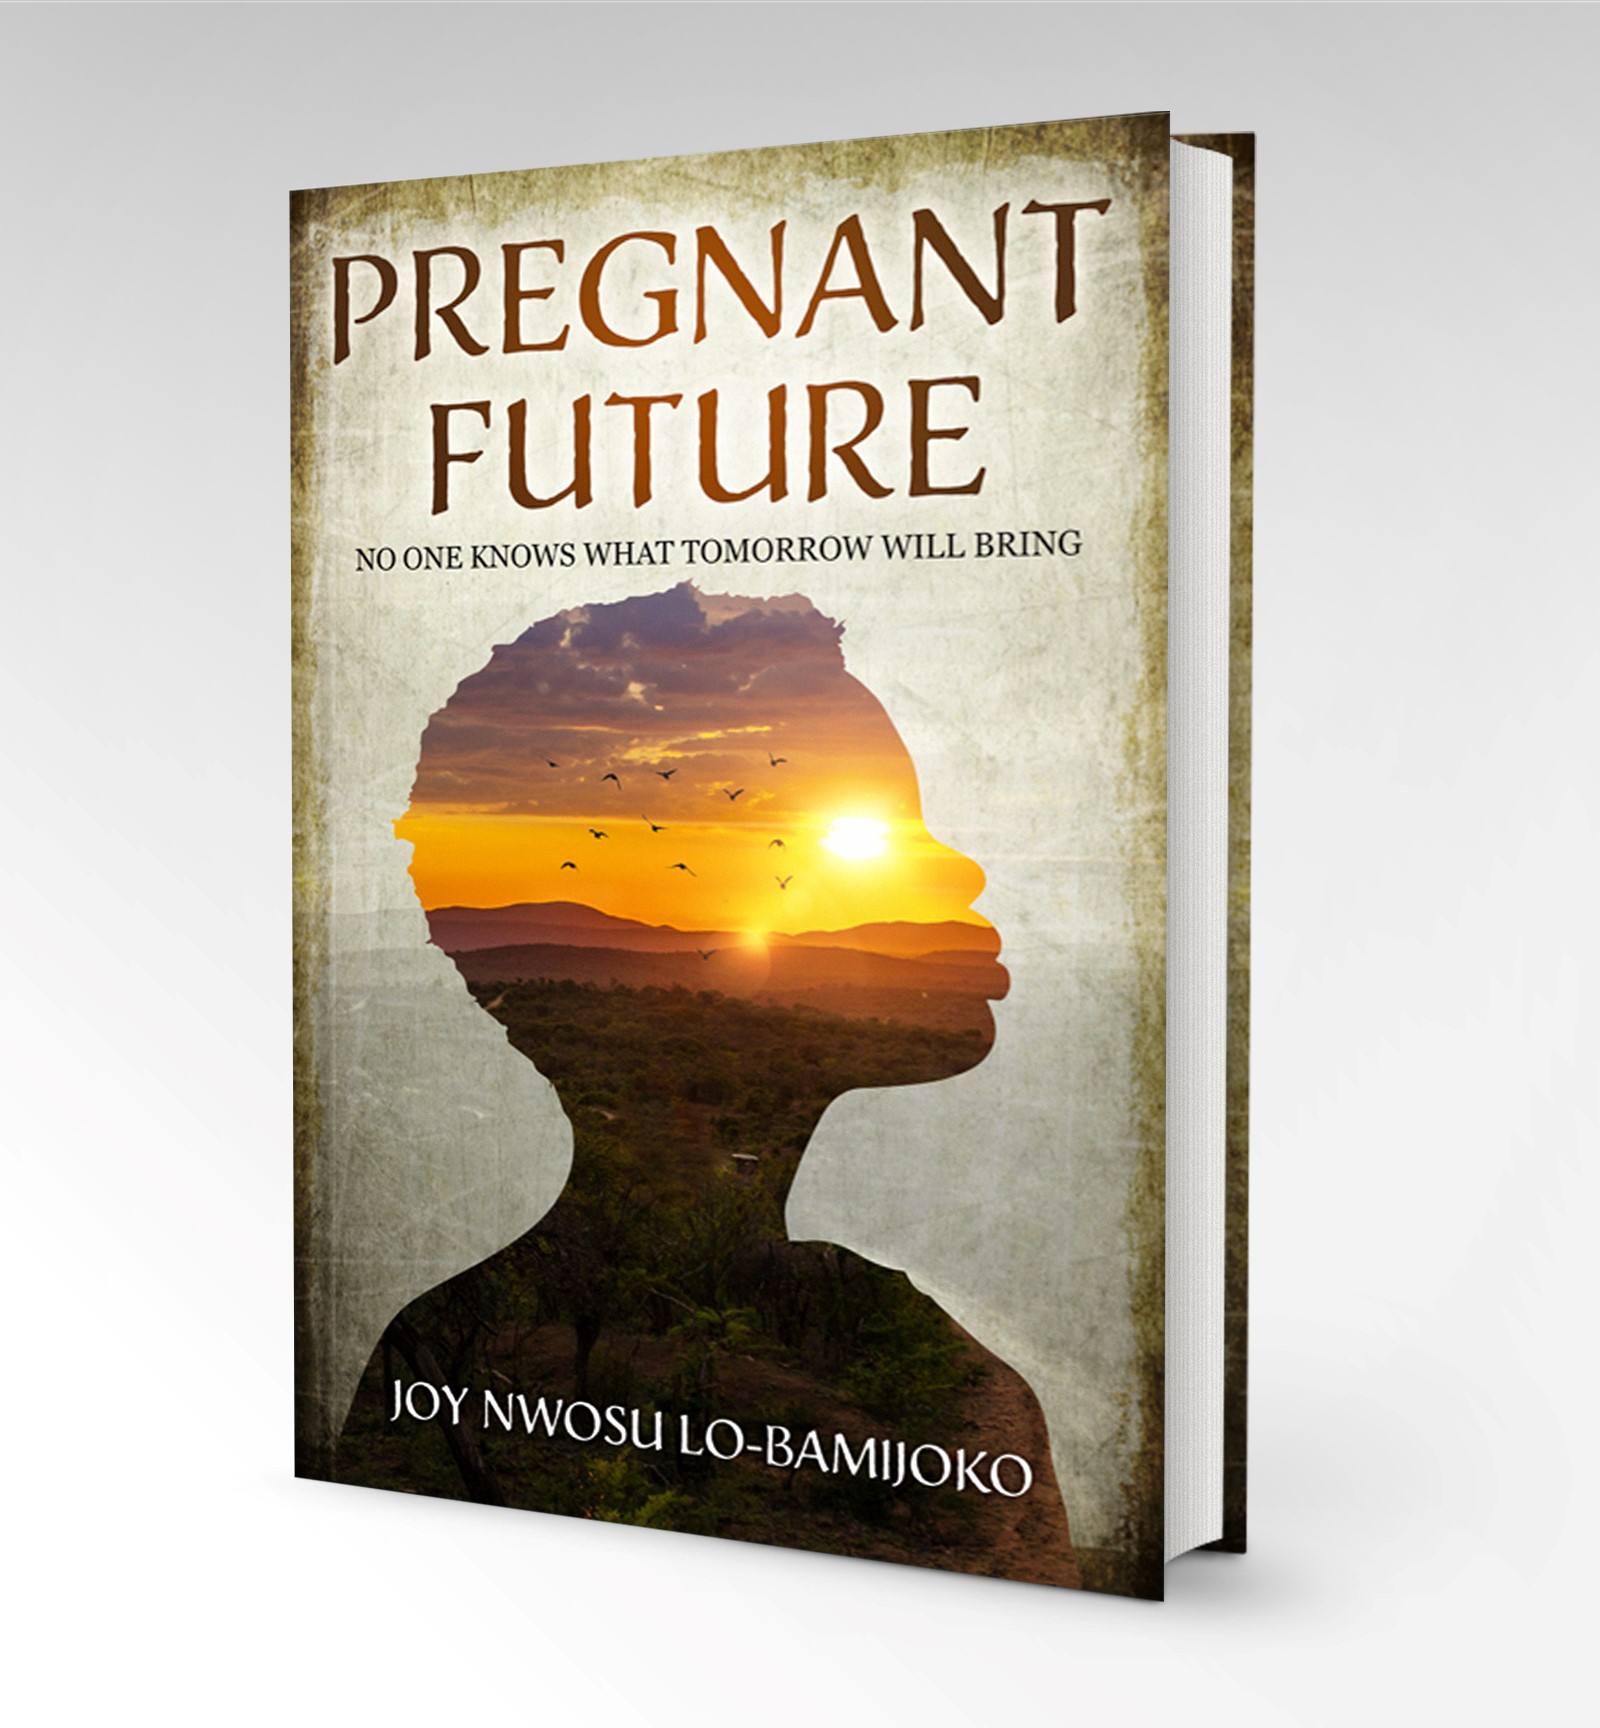 Pregnant Future by Joy Lo-Bamijoko